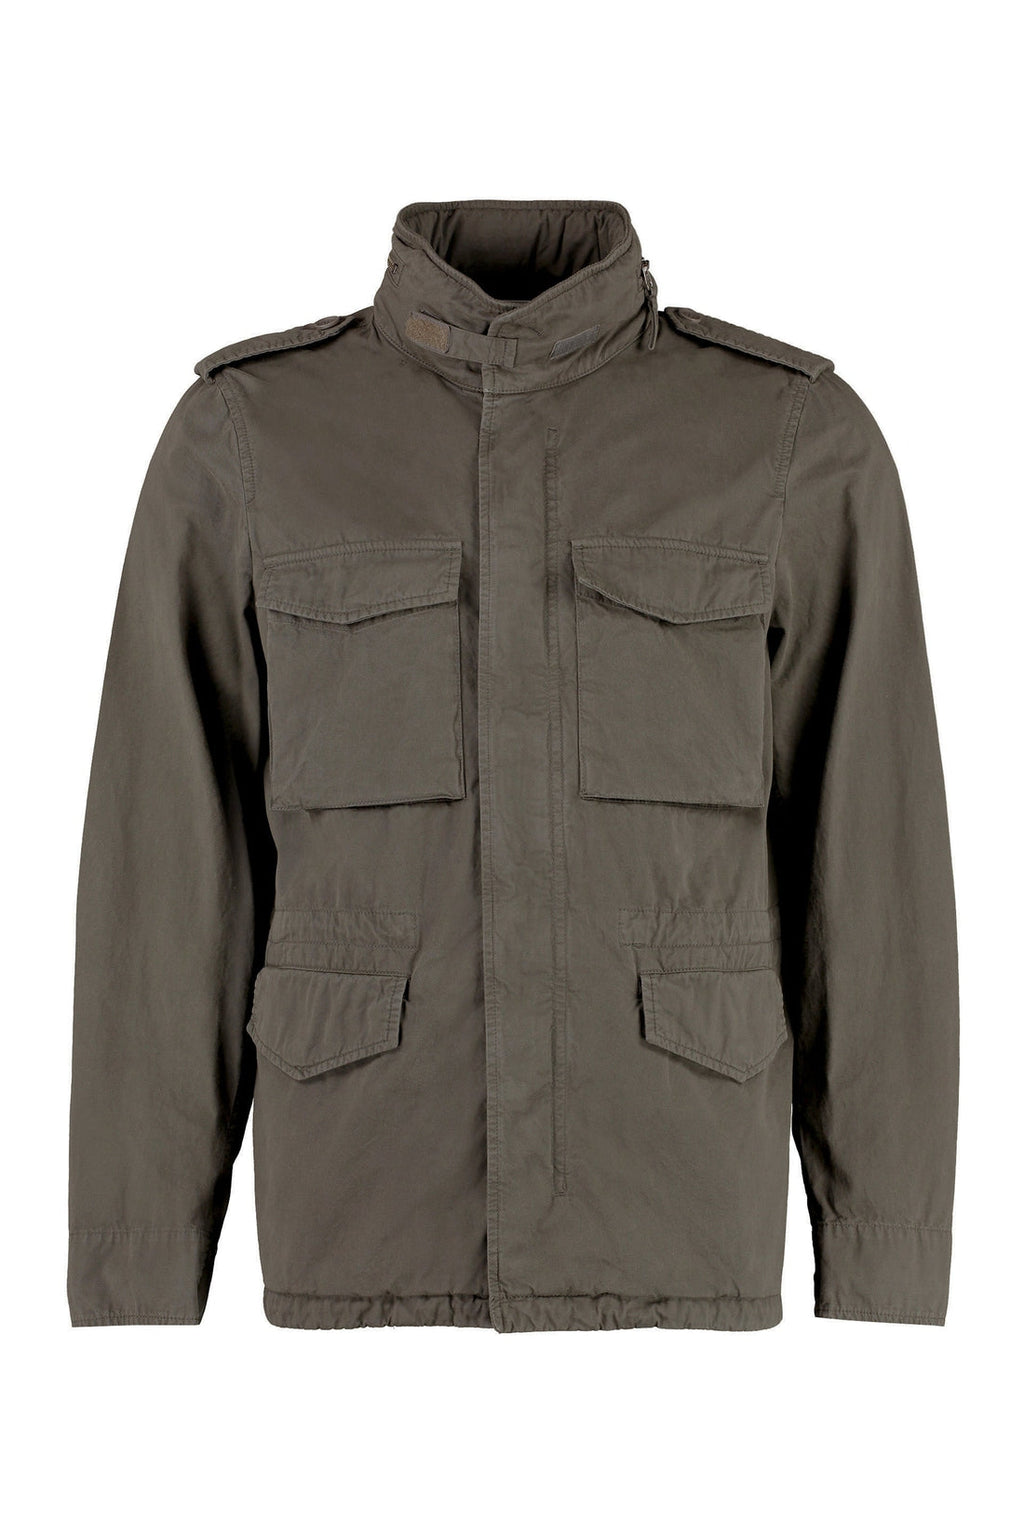 Aspesi-OUTLET-SALE-Mini Field cotton jacket-ARCHIVIST